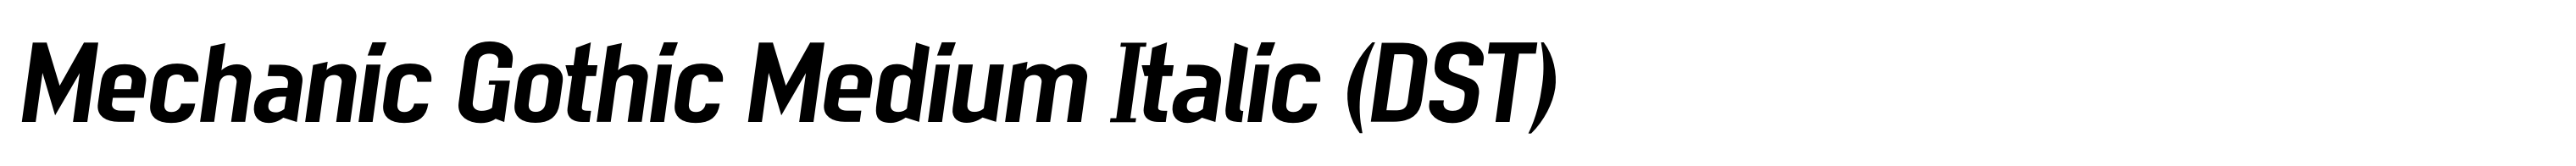 Mechanic Gothic Medium Italic (DST)